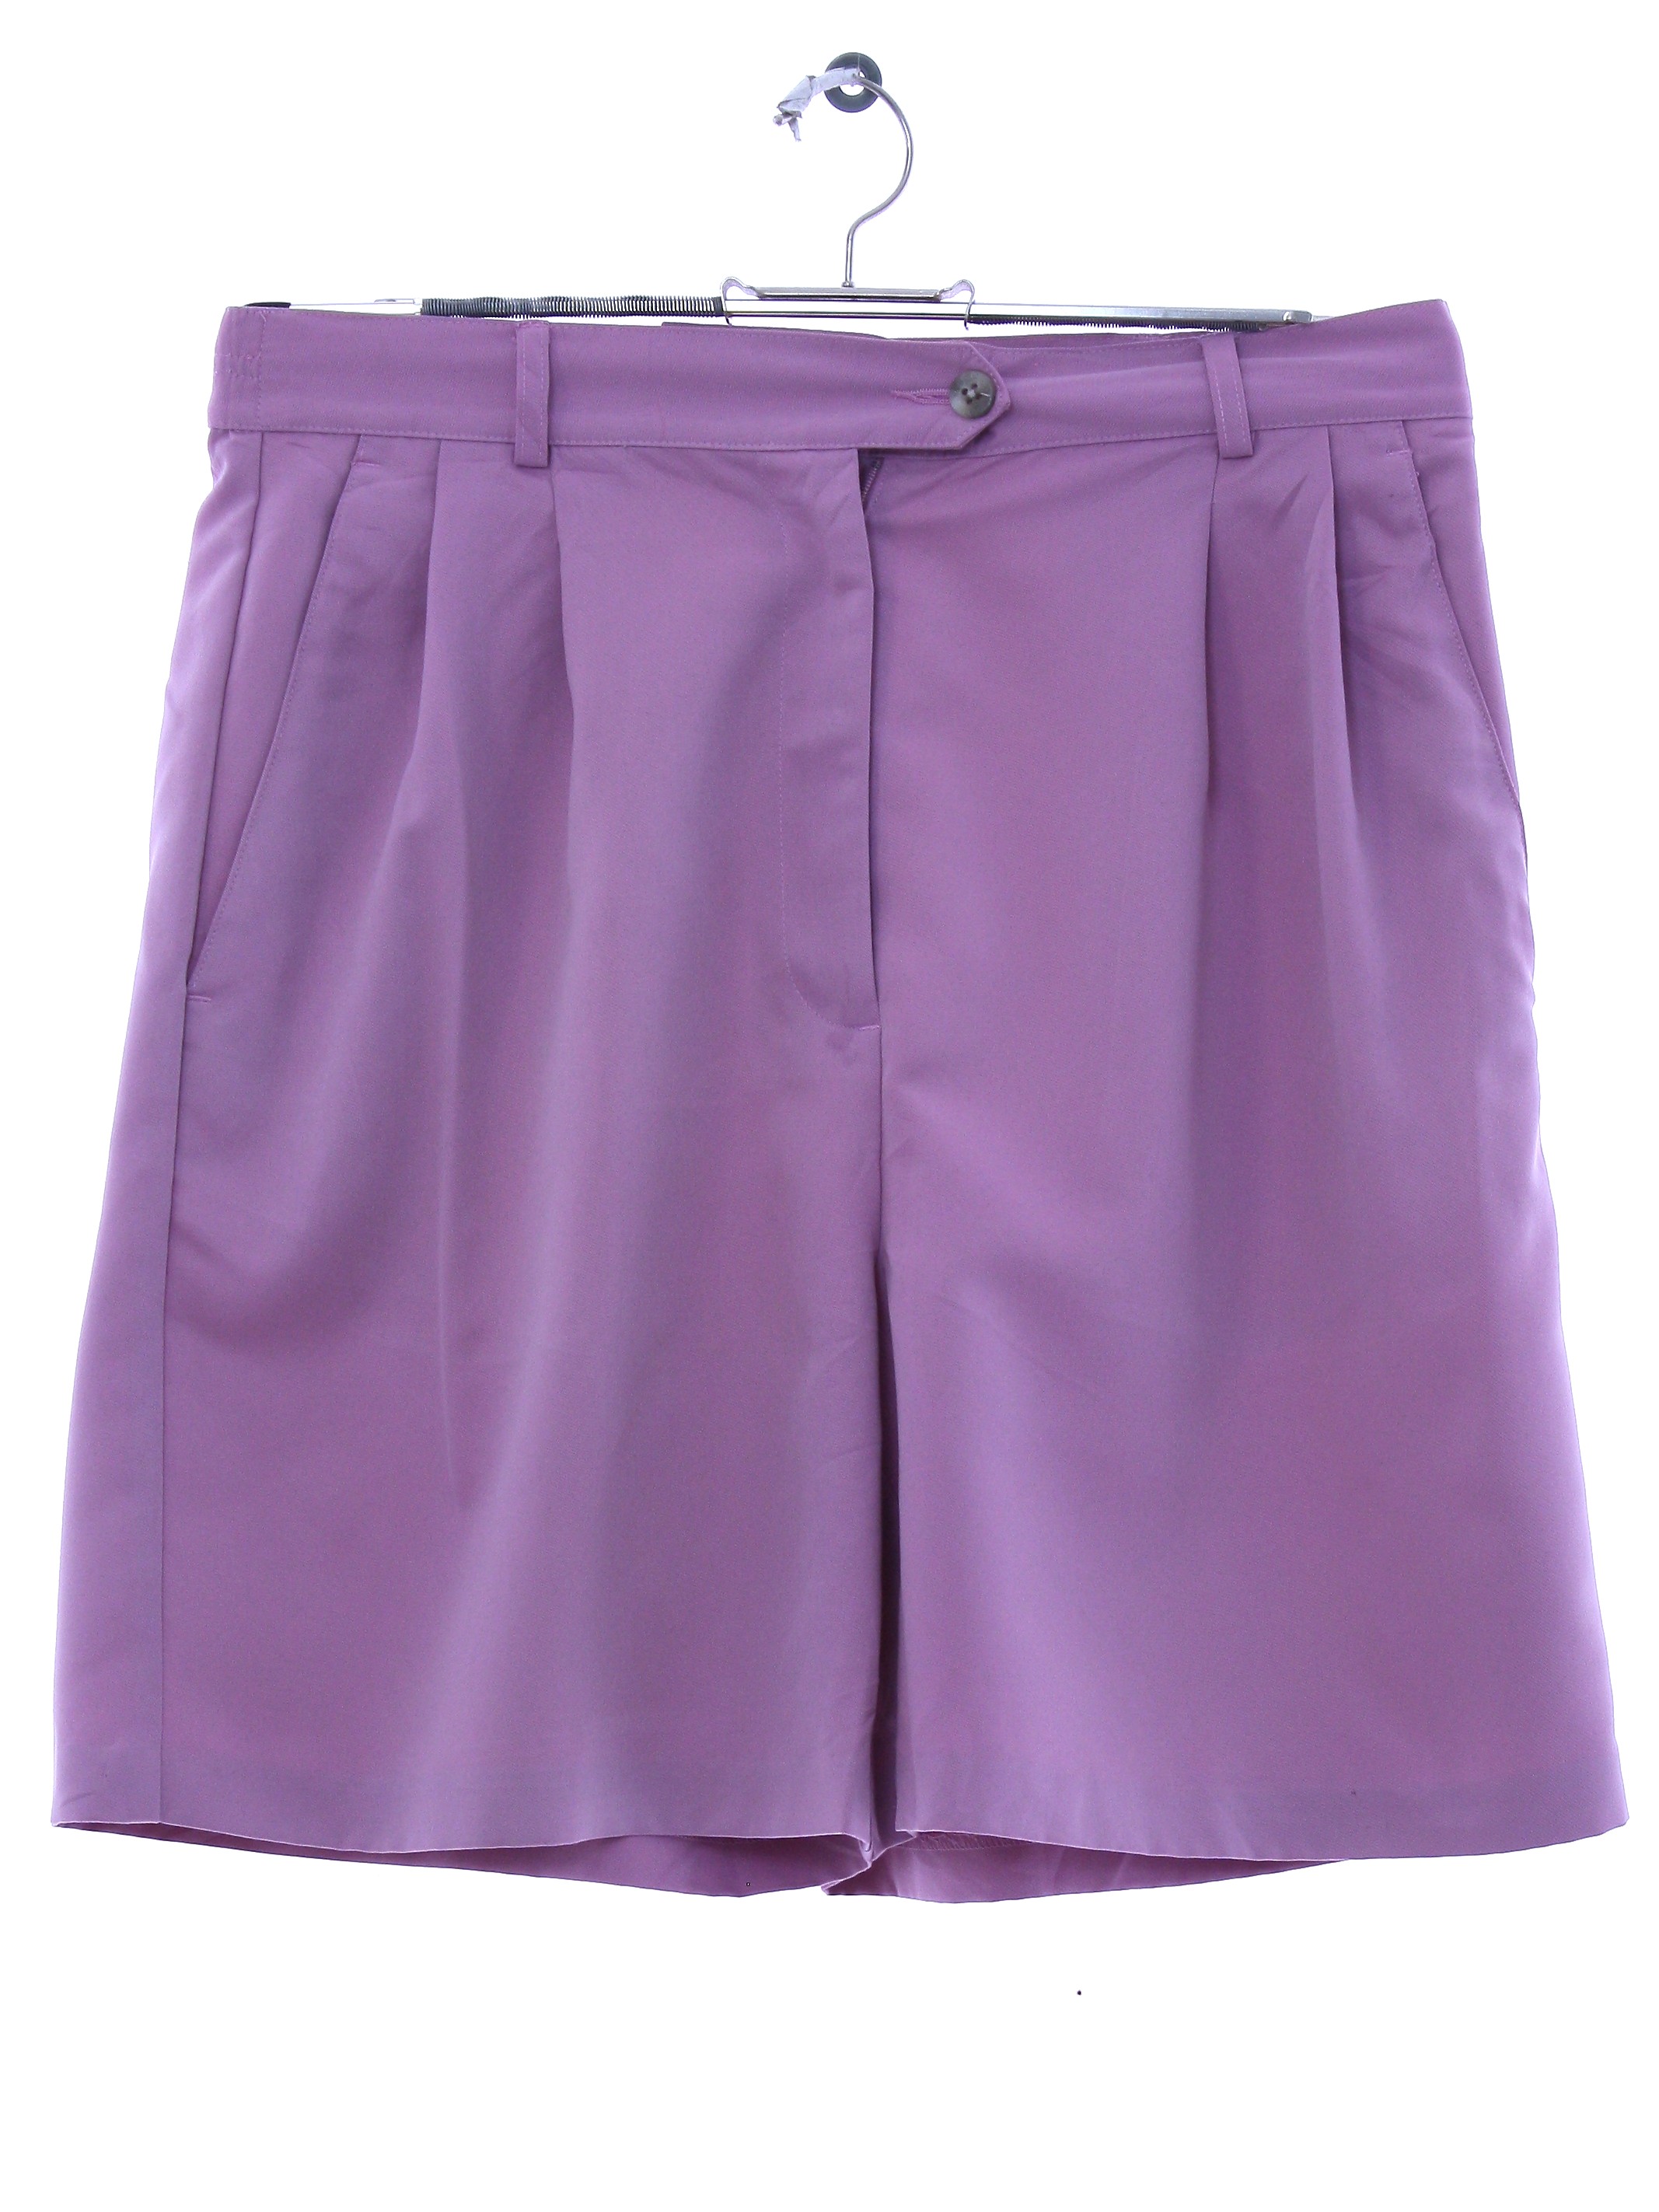 Retro 90s Shorts (Izod) : 90s -Izod- Womens lilac solid colored